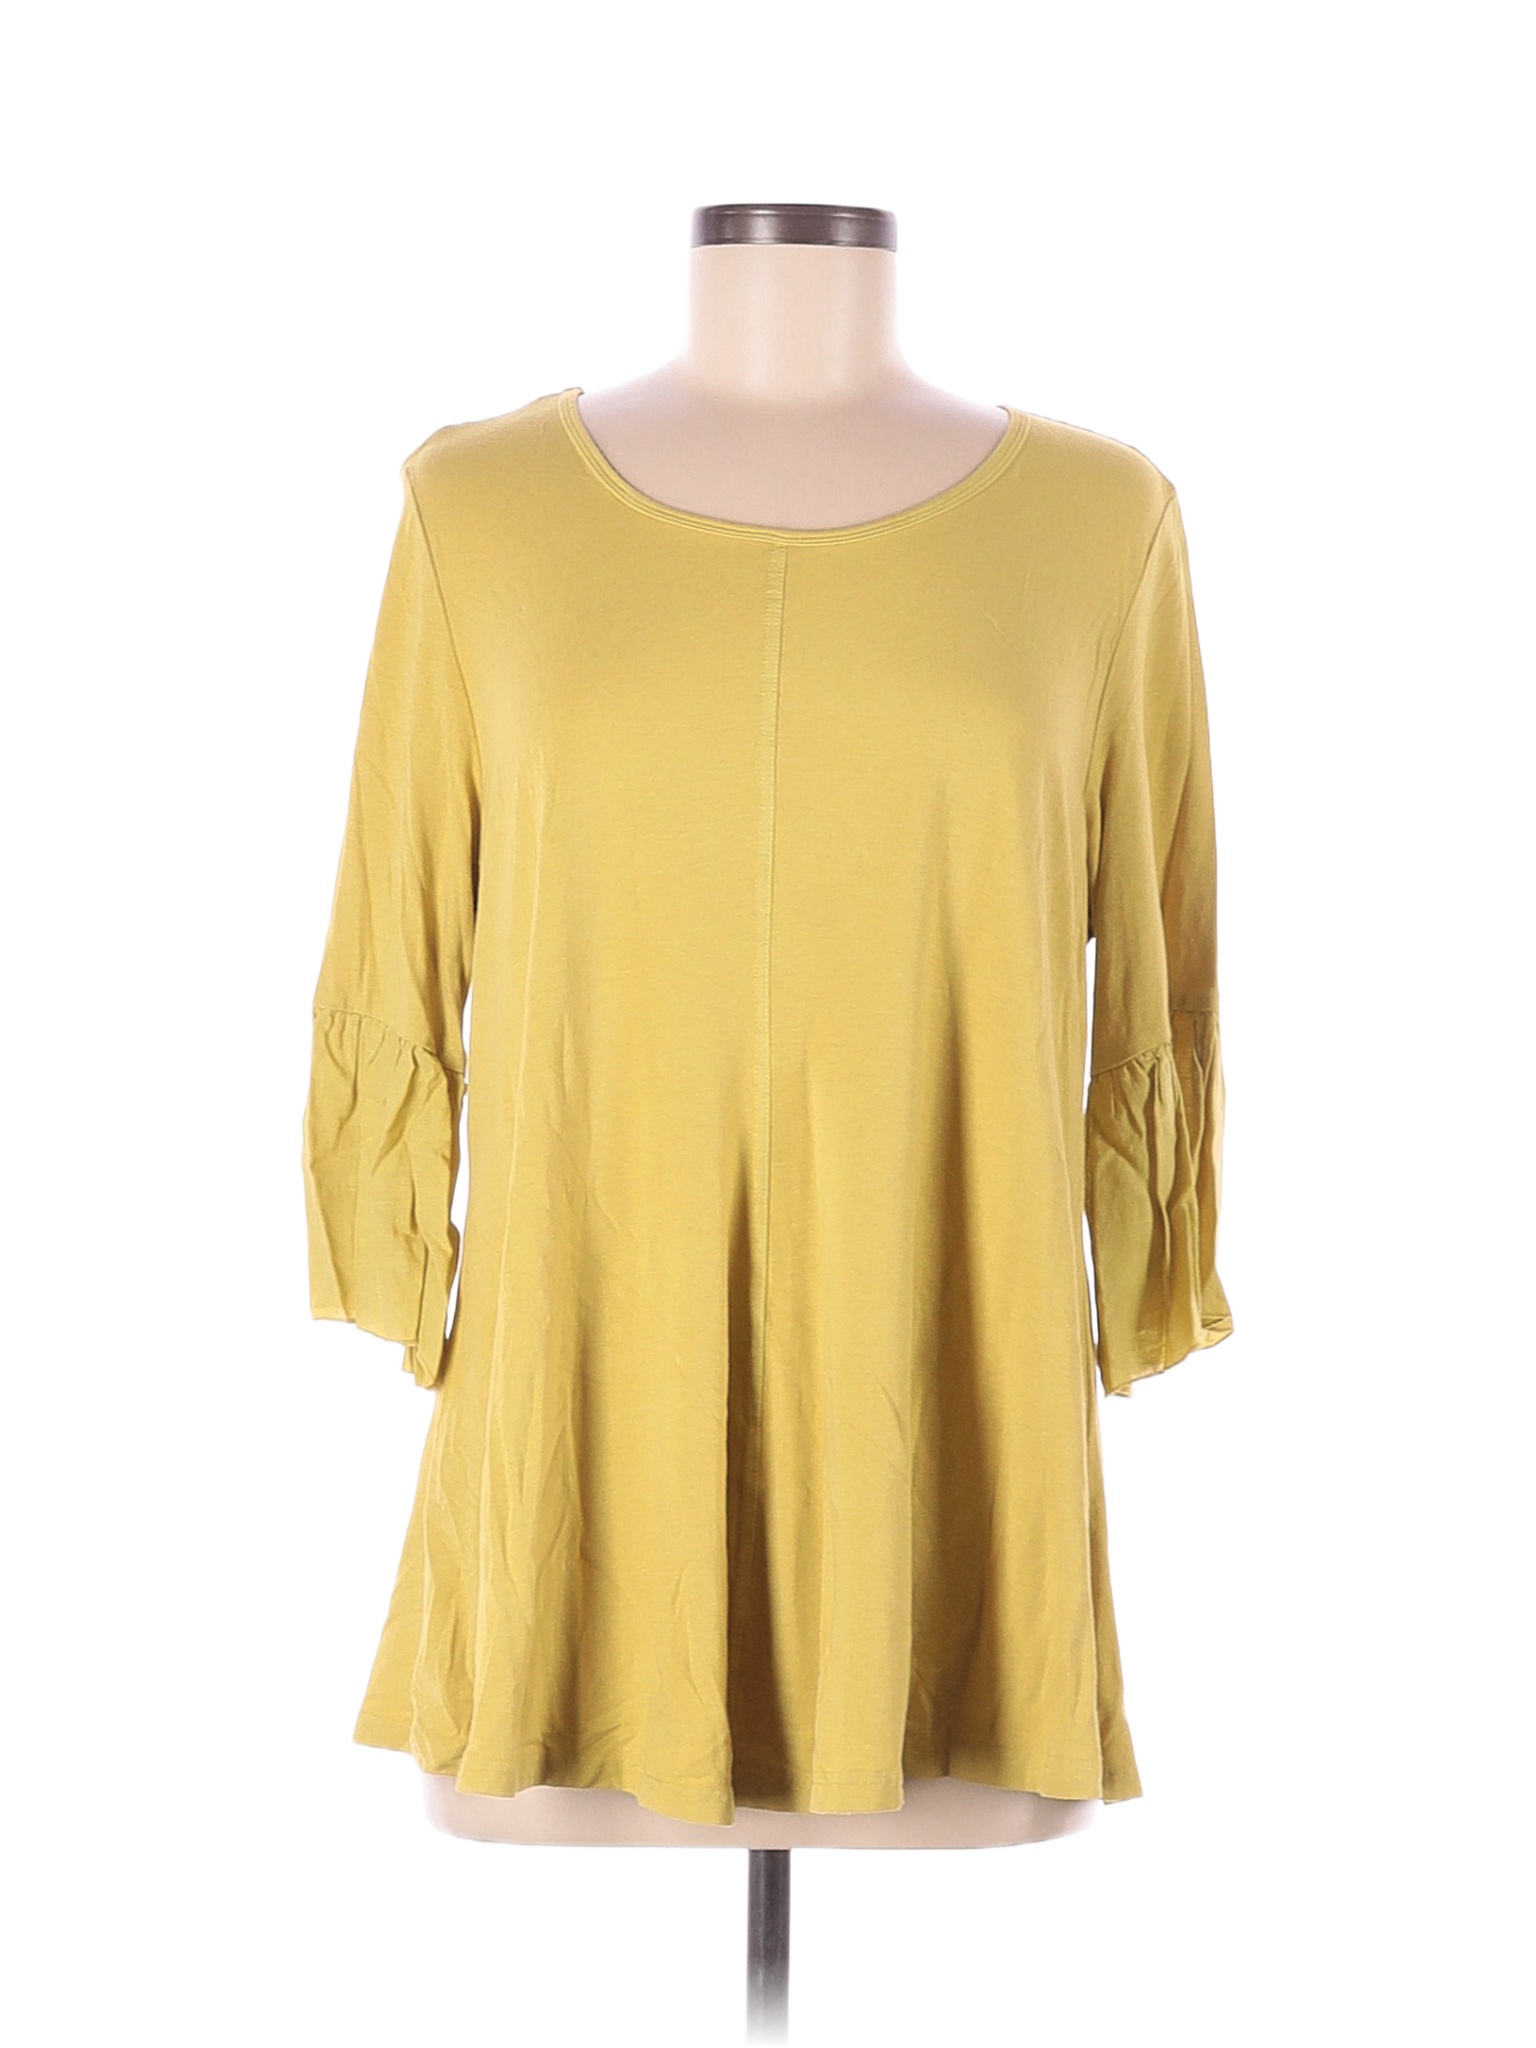 Kleen Yellow Long Sleeve Top Size M - 69% off | thredUP